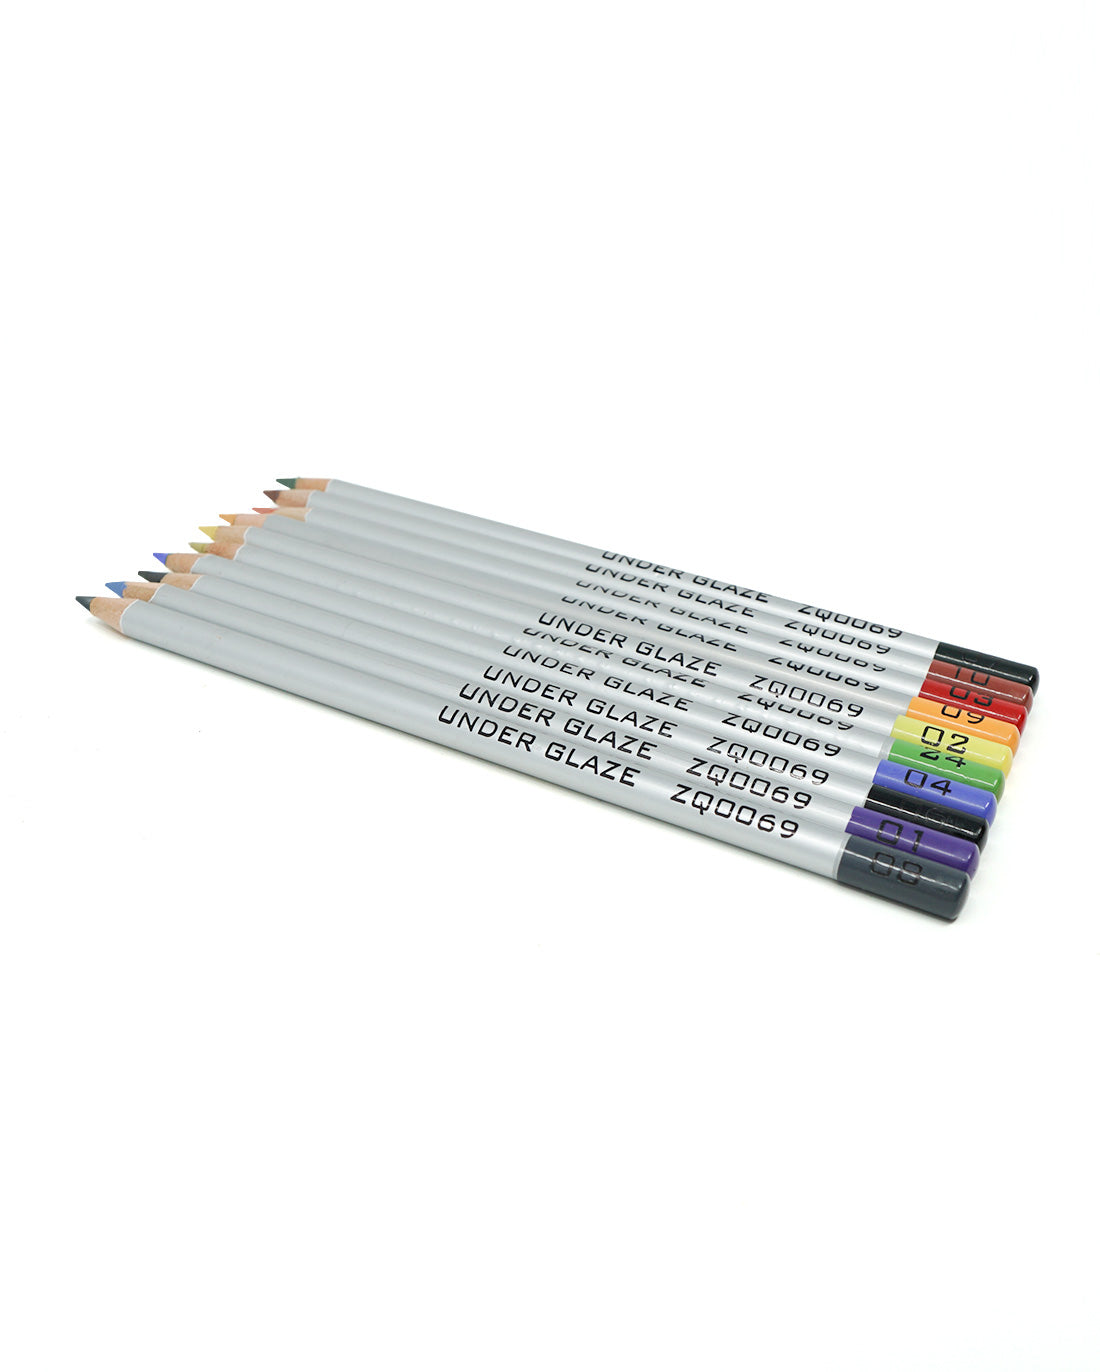 Sanbao Underglaze Pencils - Set of 12 (SBUP)